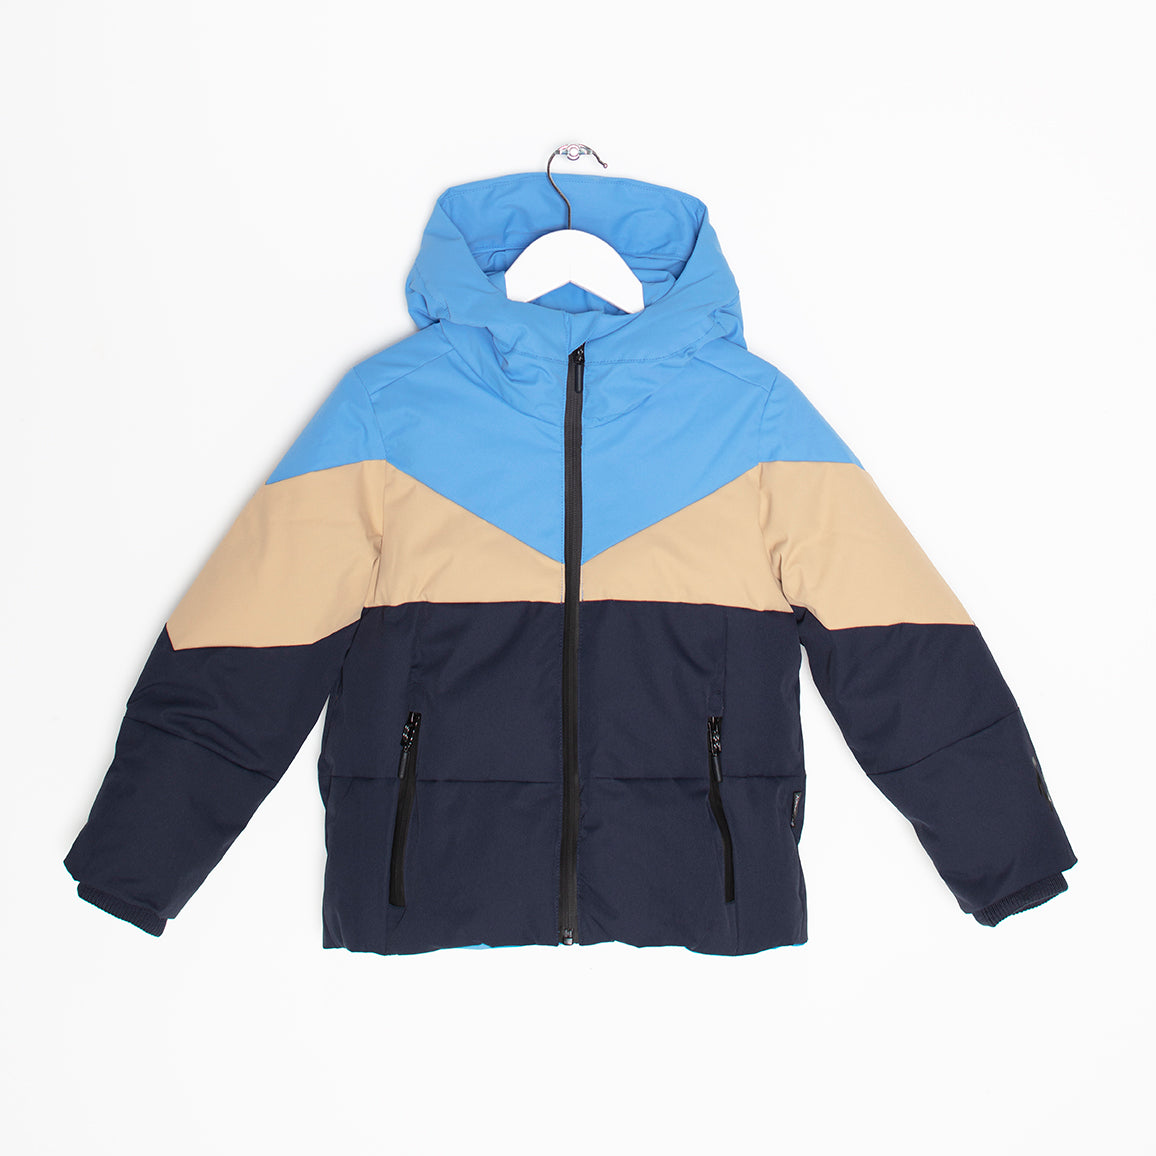 WORKING WEASEL puffer jacket /Marina Blue Multi Colour